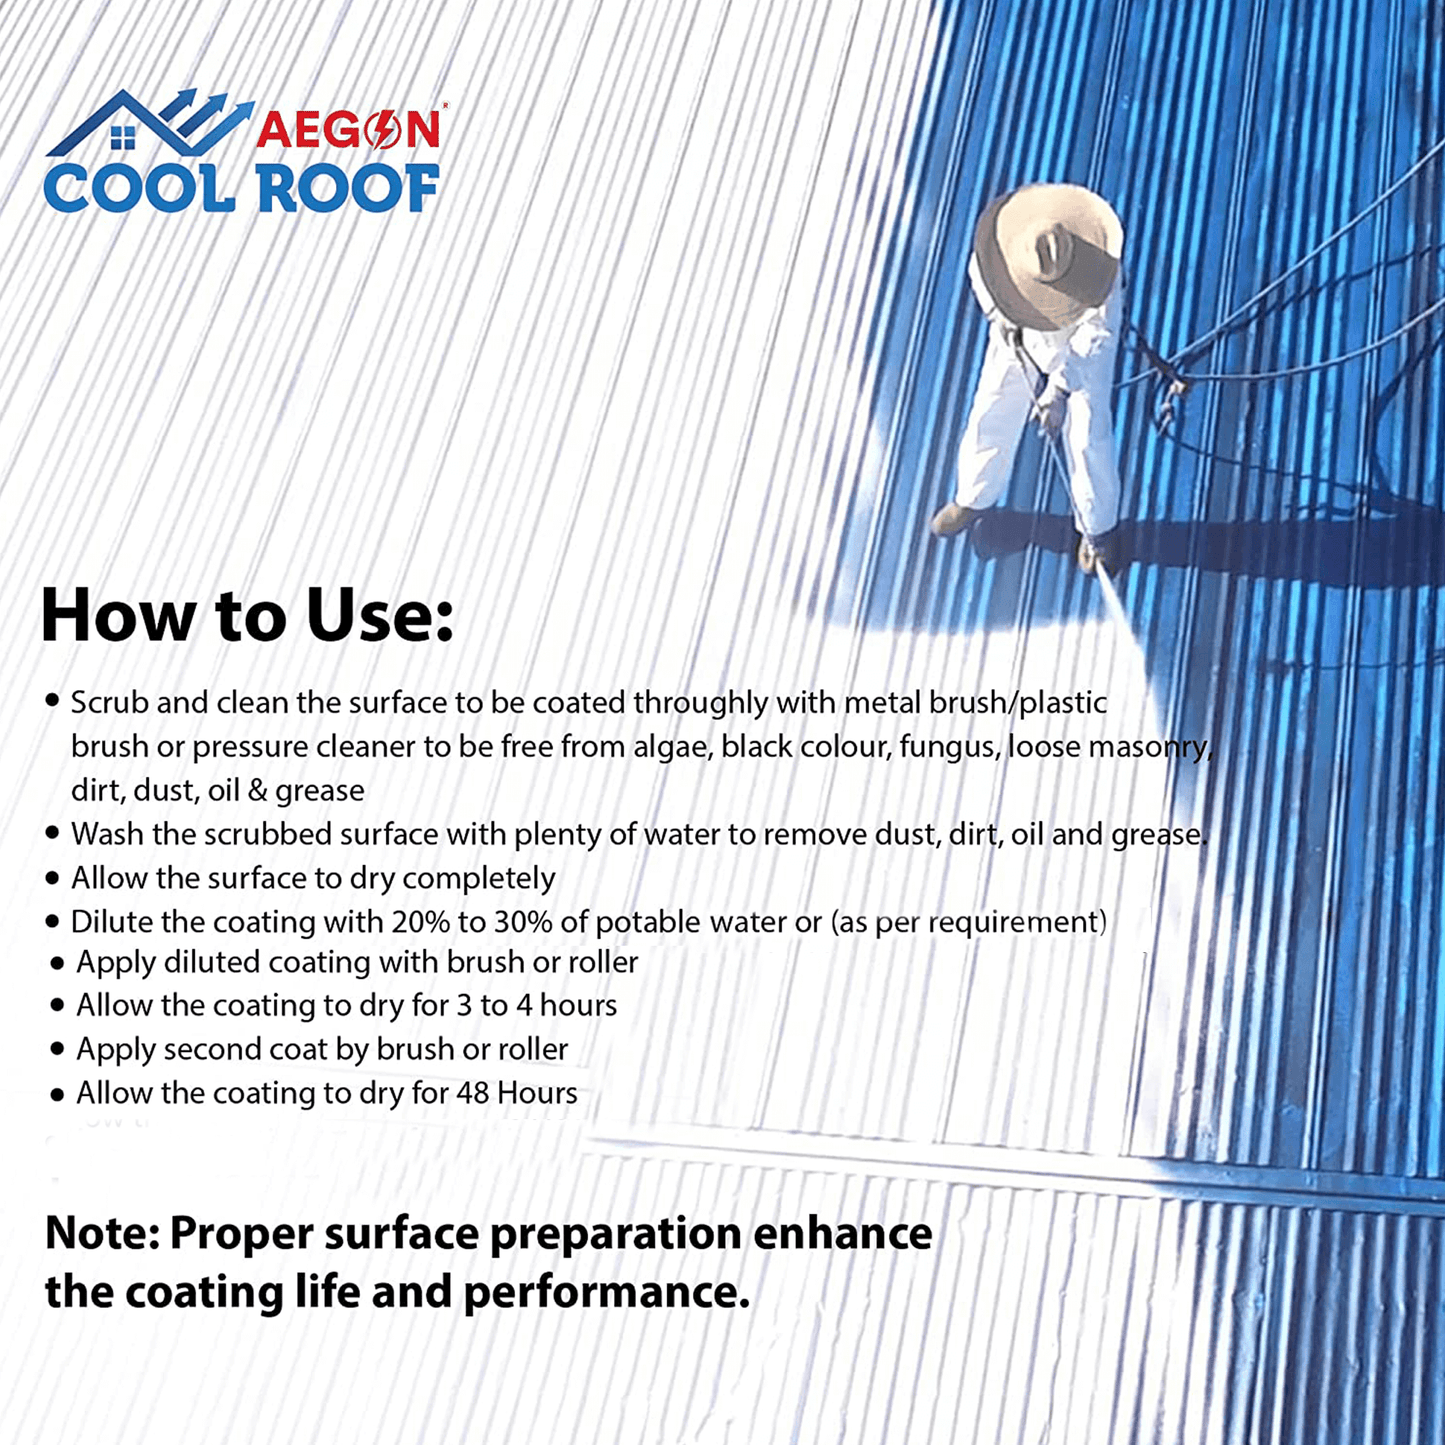 Aegon Cool Roof Coating - Heat Resistant Solar Reflective Roof Coating (20 Ltrs)